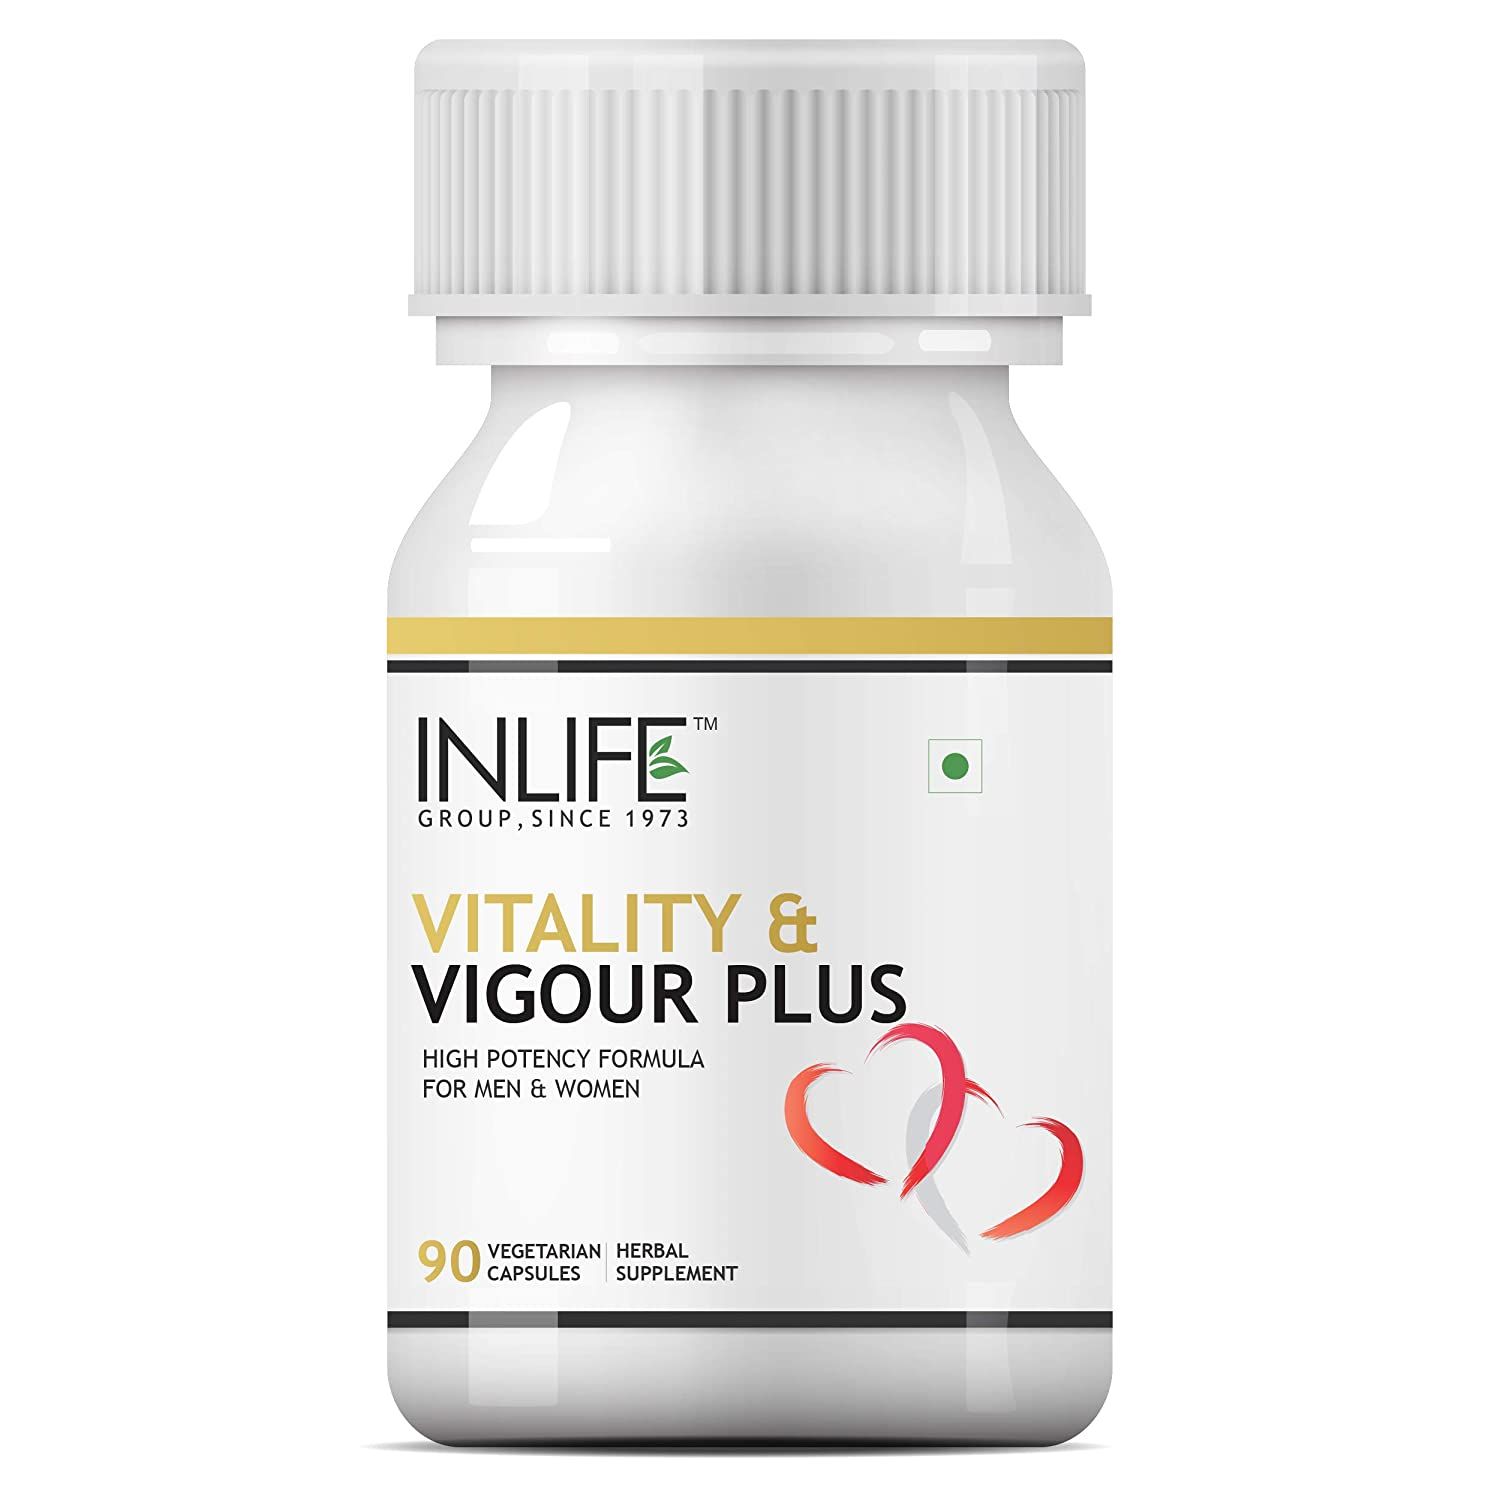 Inlife Vitality & Vigour Plus Capsules Image